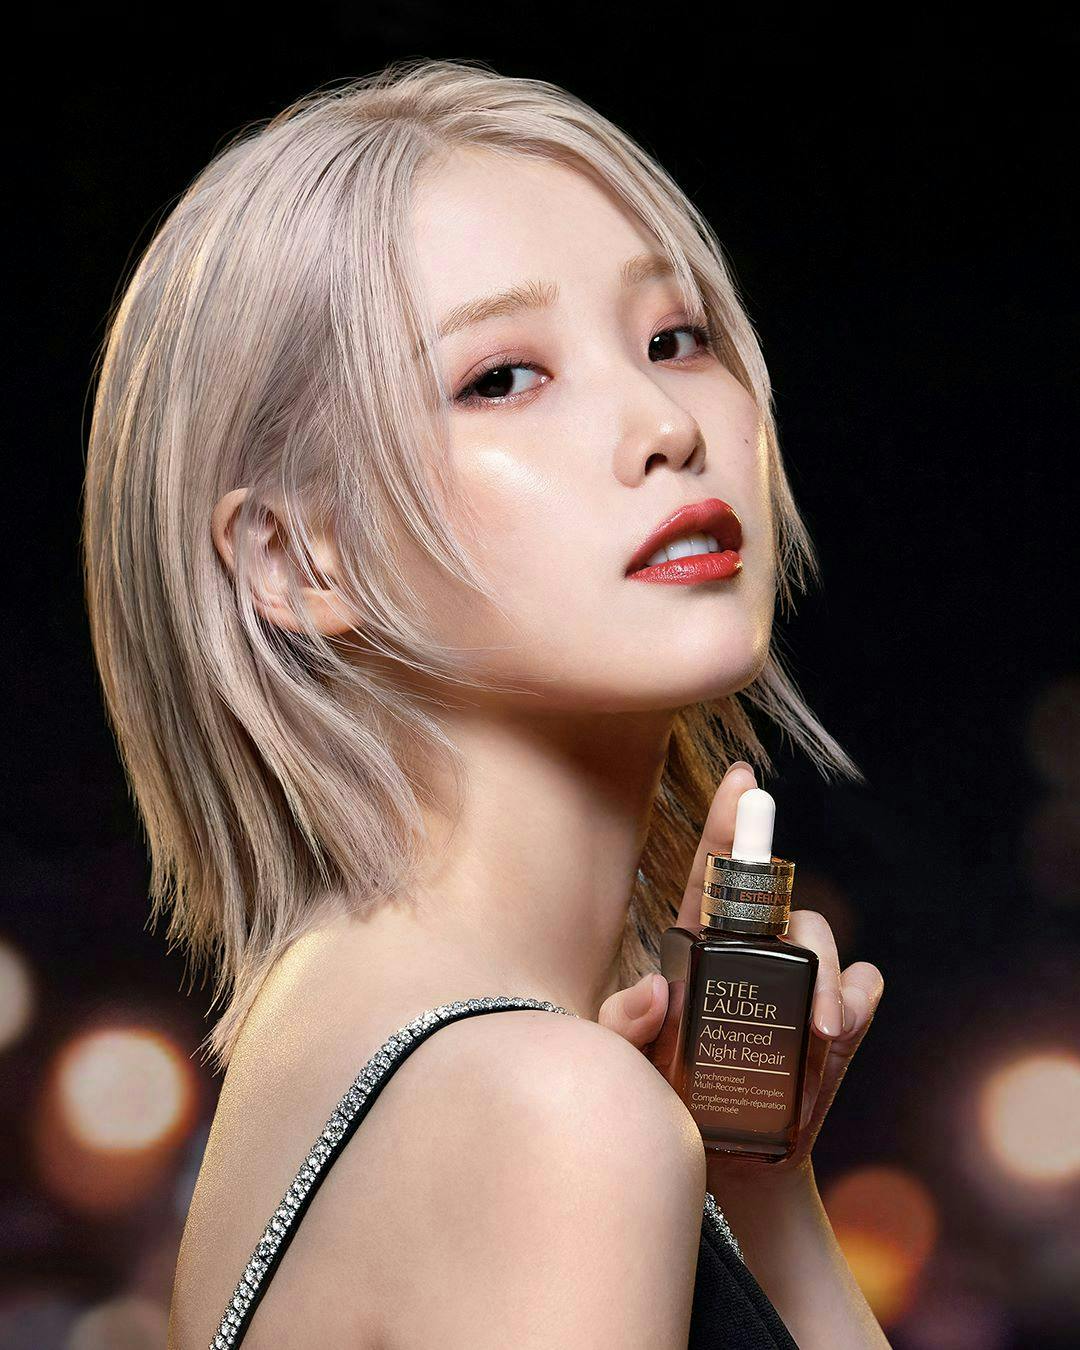 blonde hair person bottle cosmetics perfume